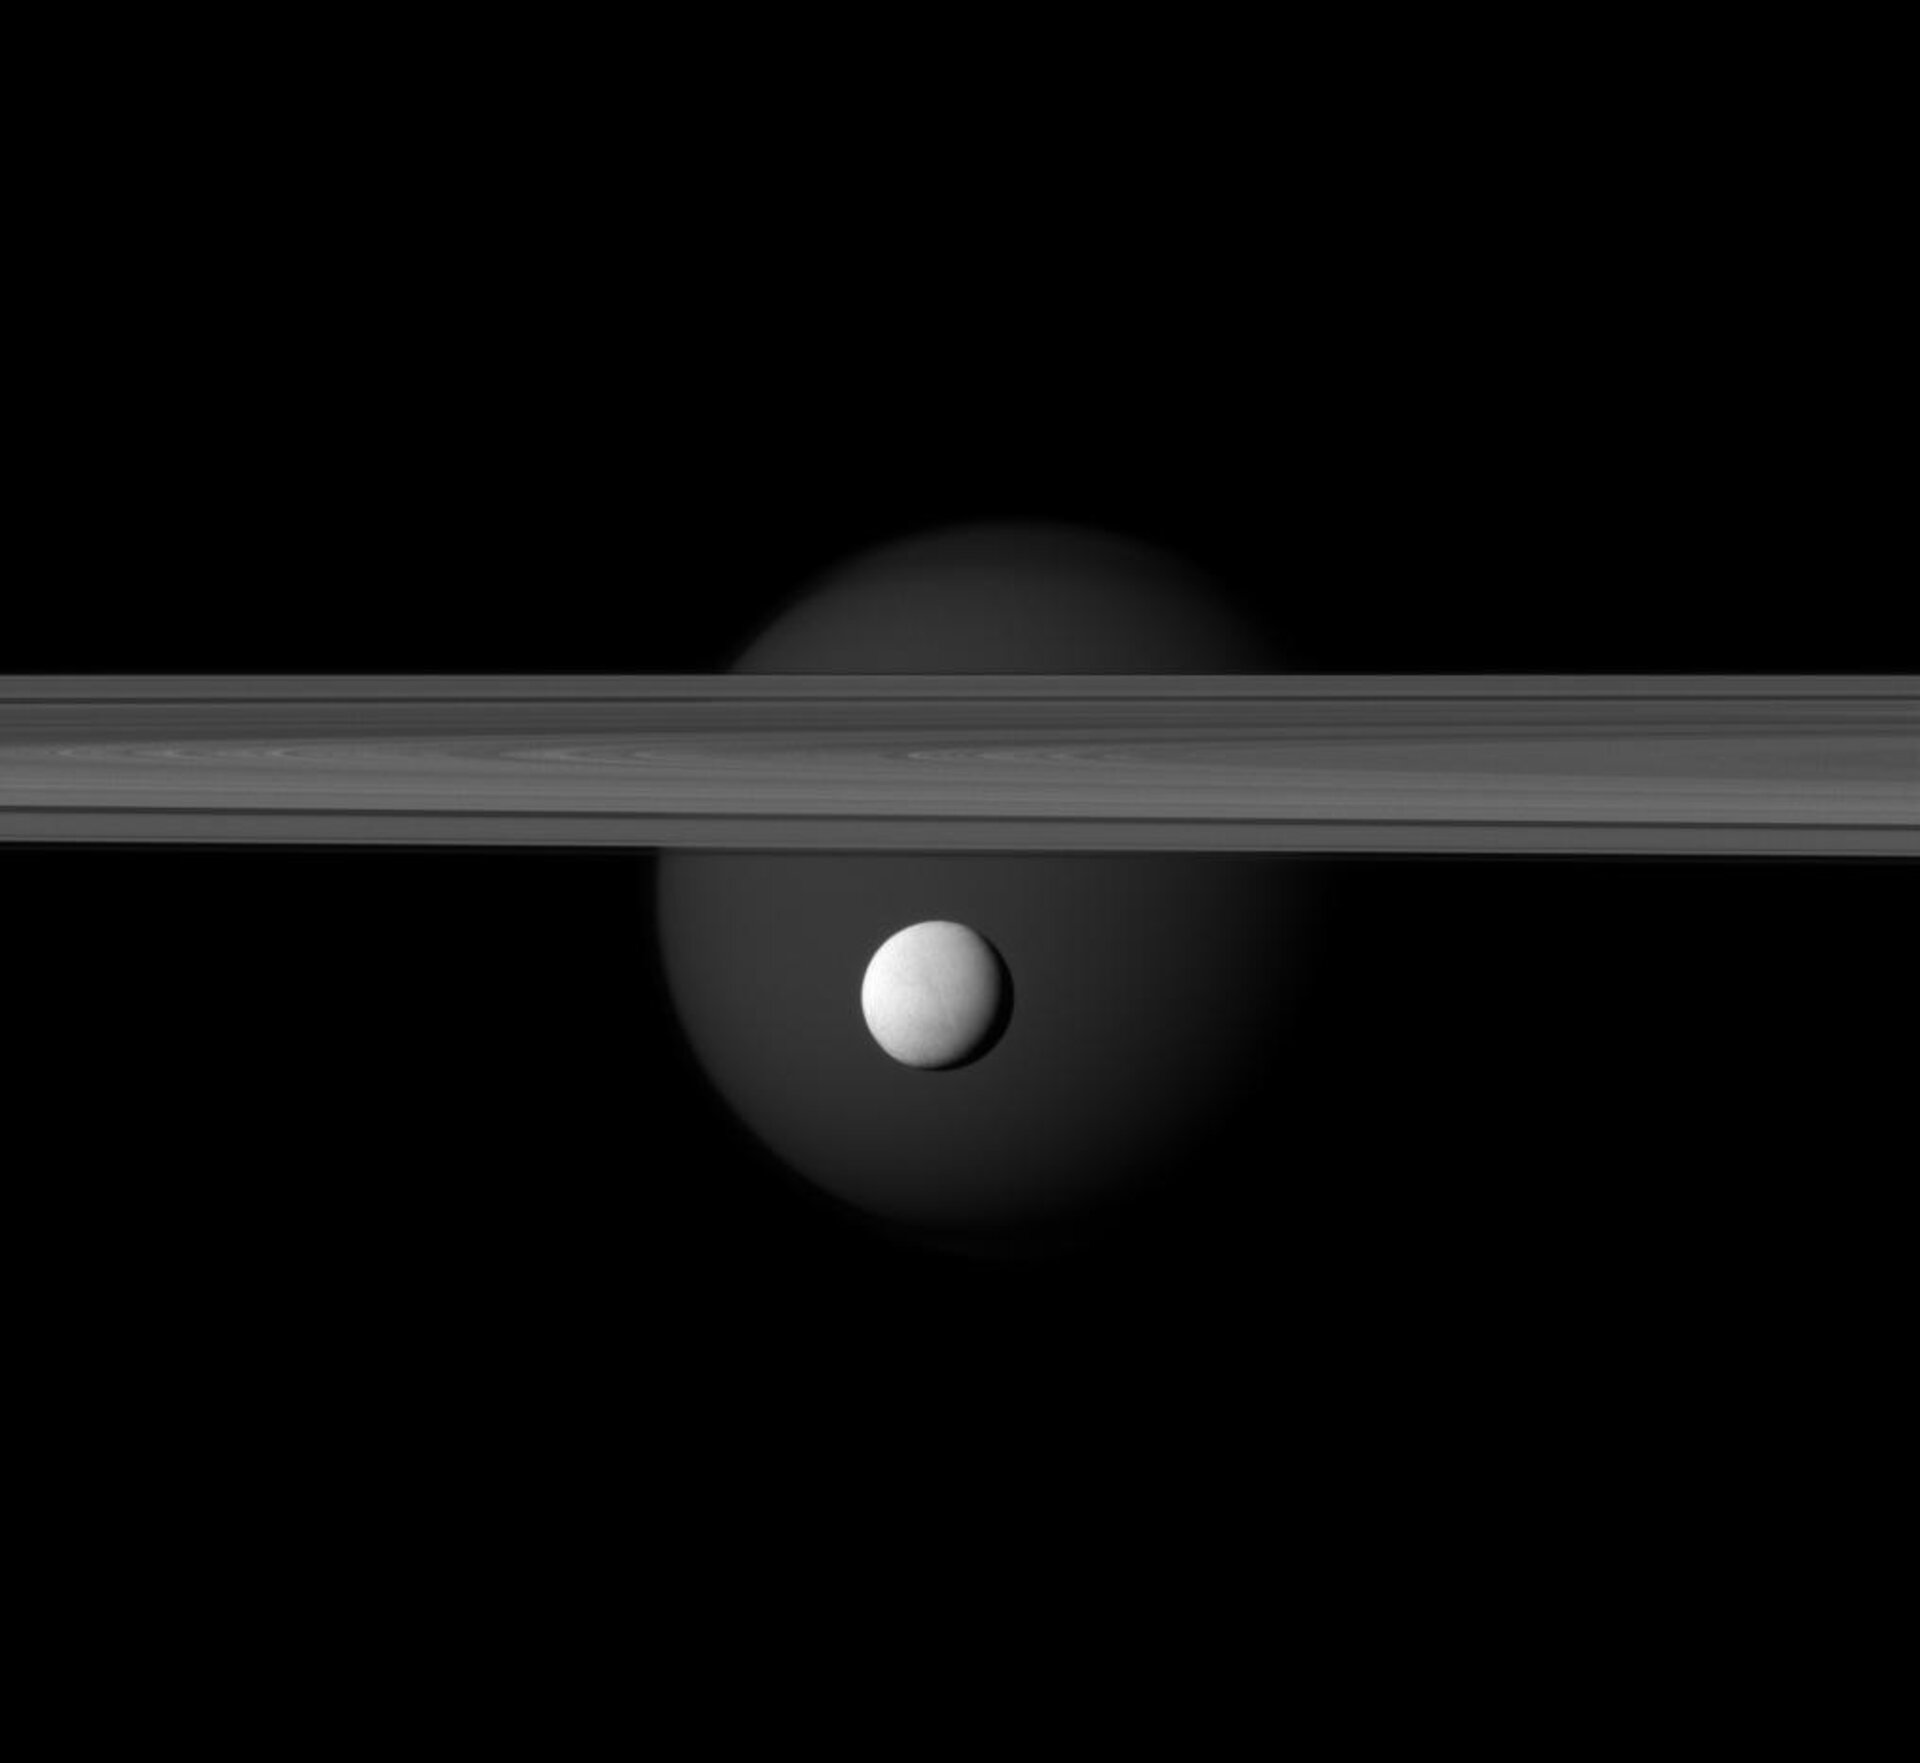 Saturn’s rings, Titan and Enceladus